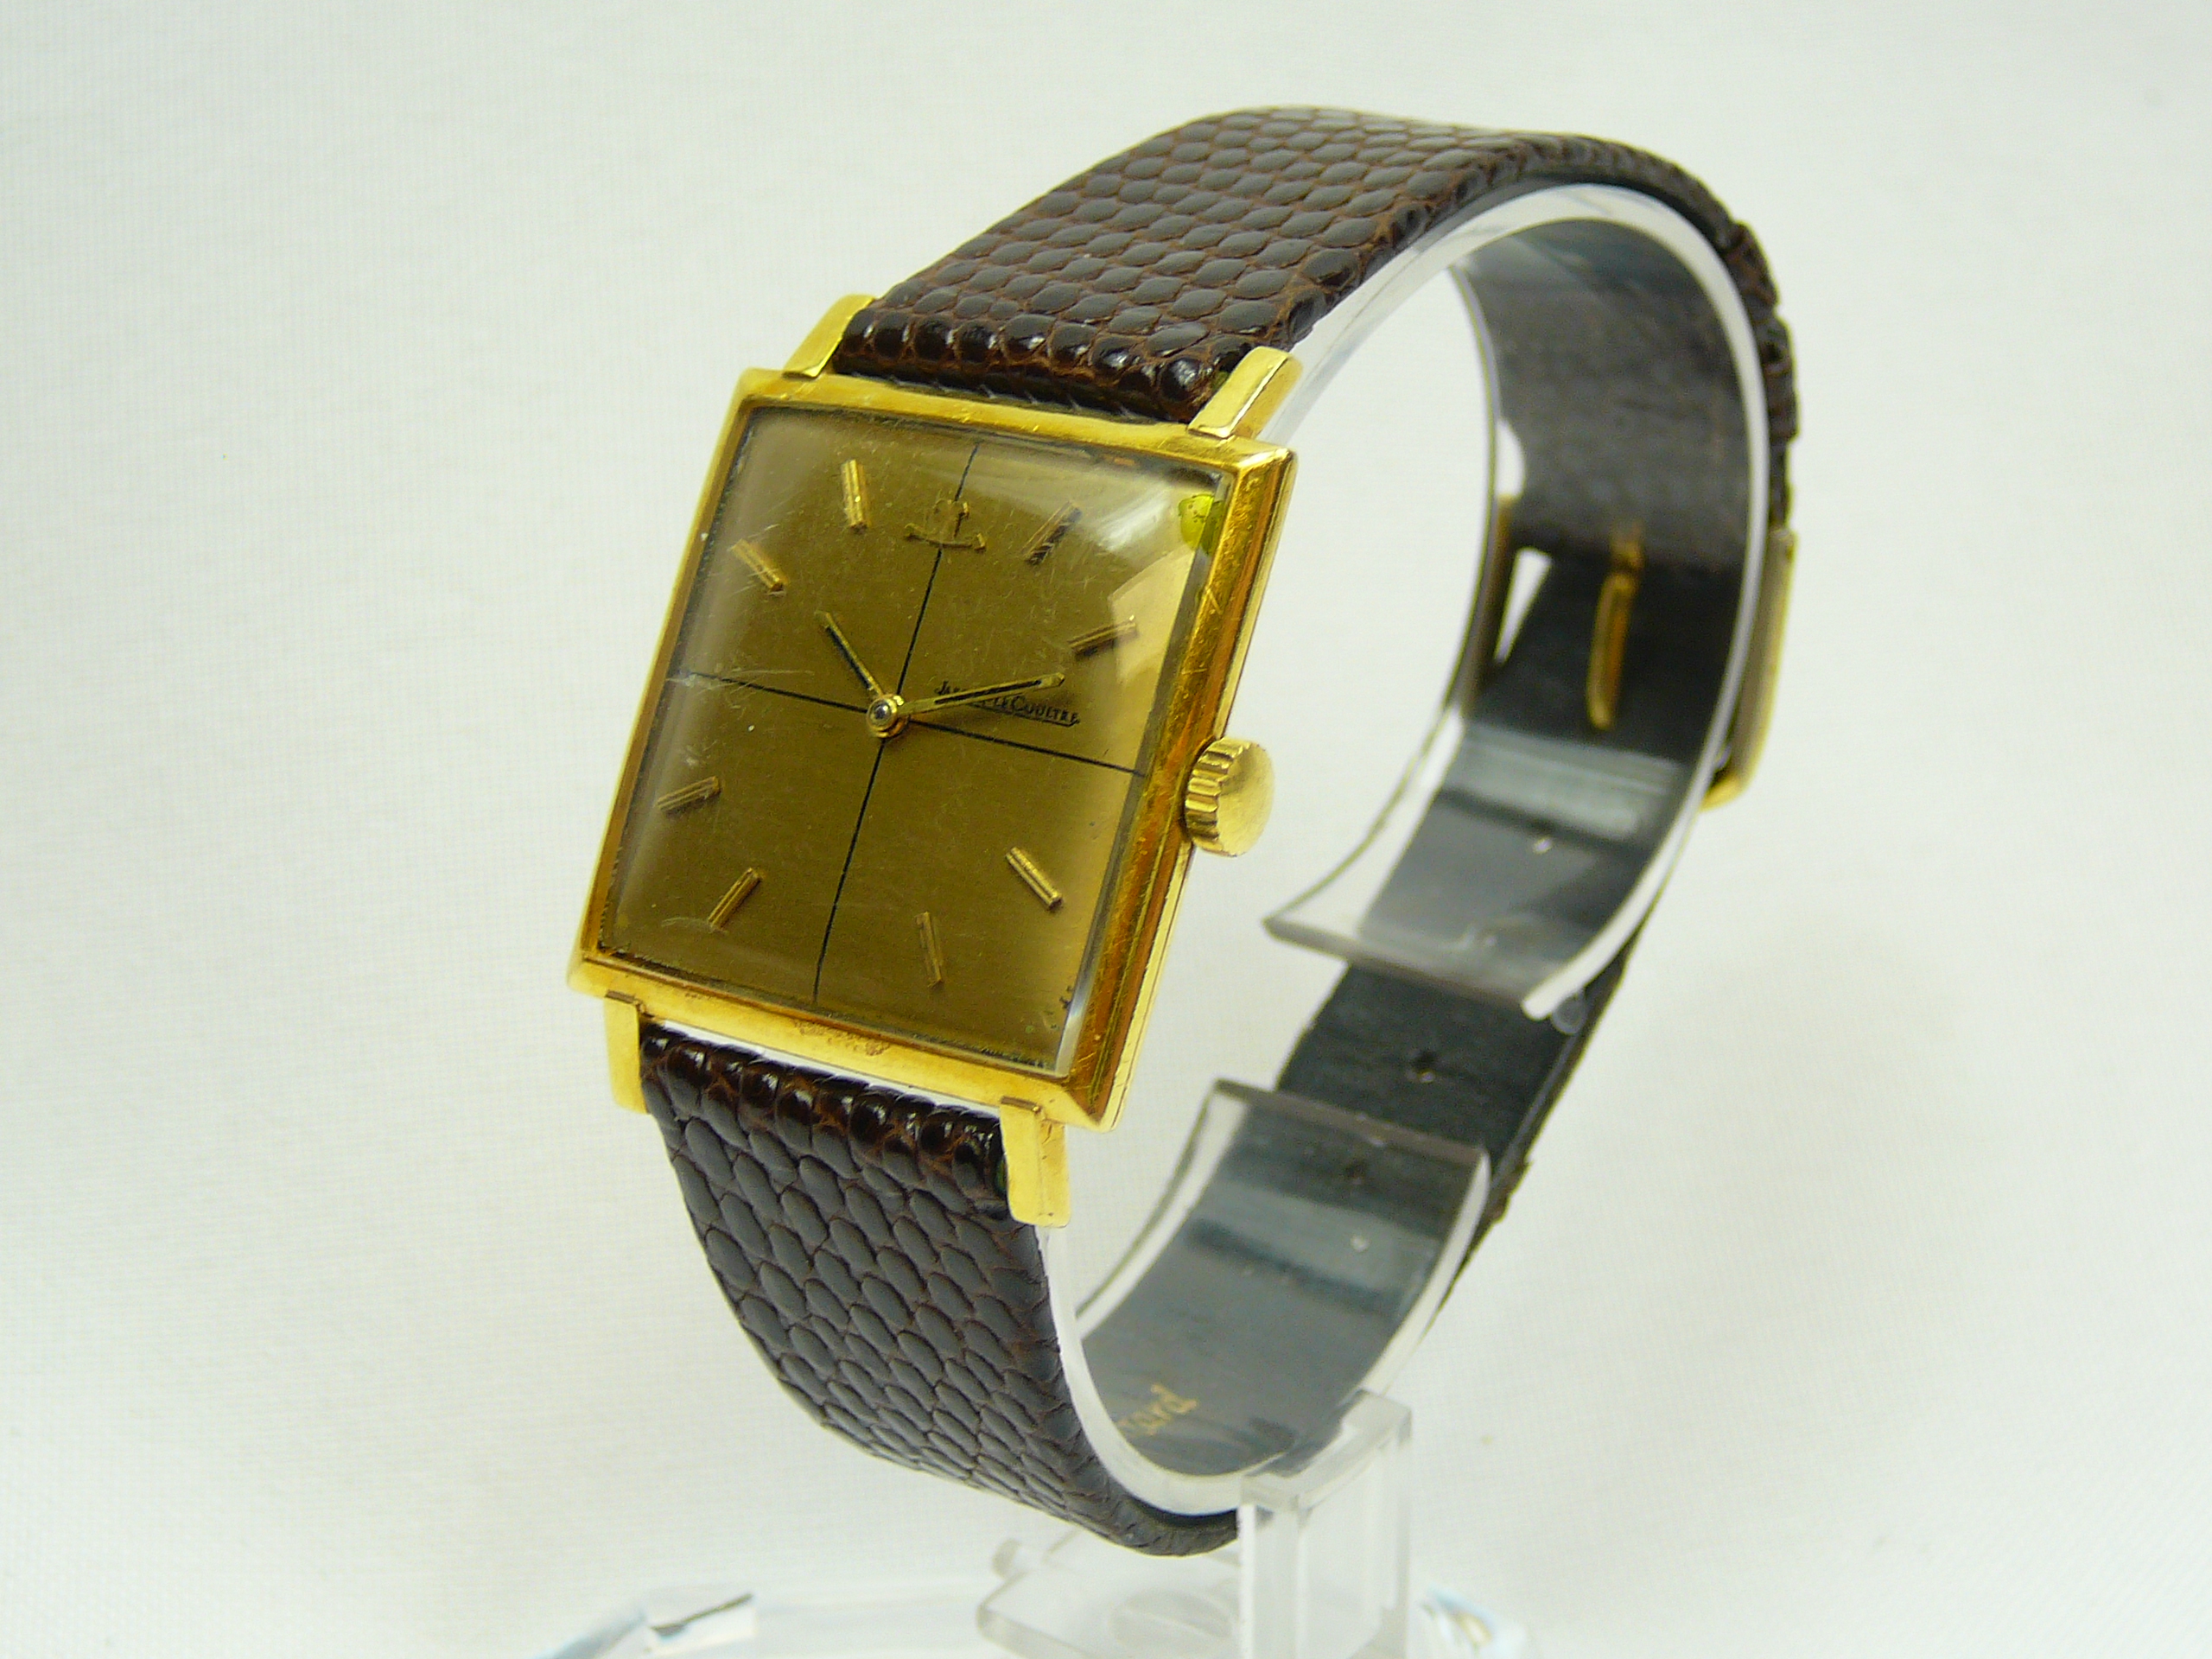 Gents Vintage Gold Jaeger LeCoultre Wrist Watch